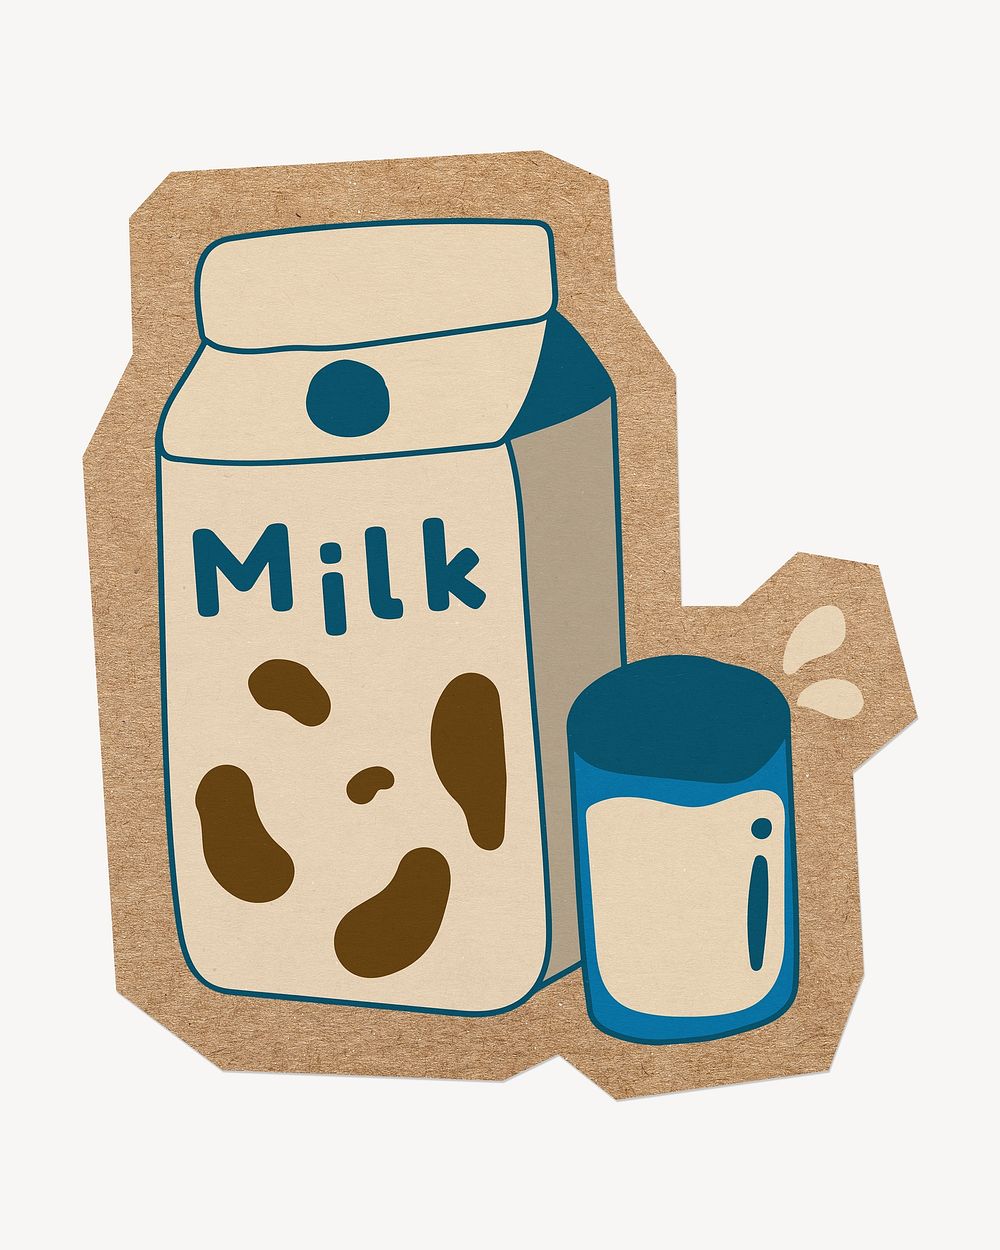 Cute milk carton, cut out paper element